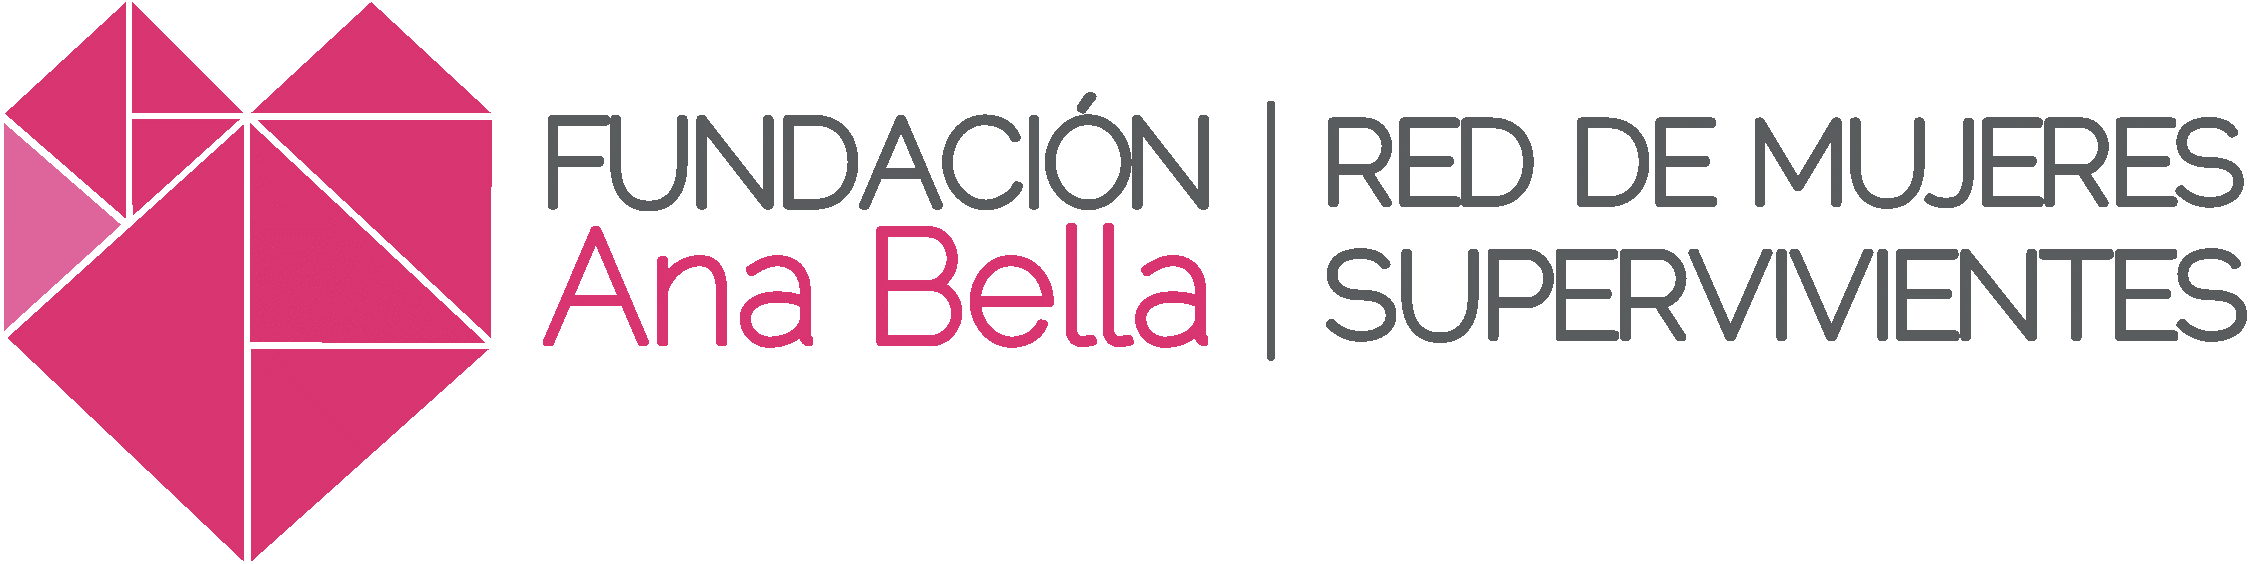 Fundación Ana Bella